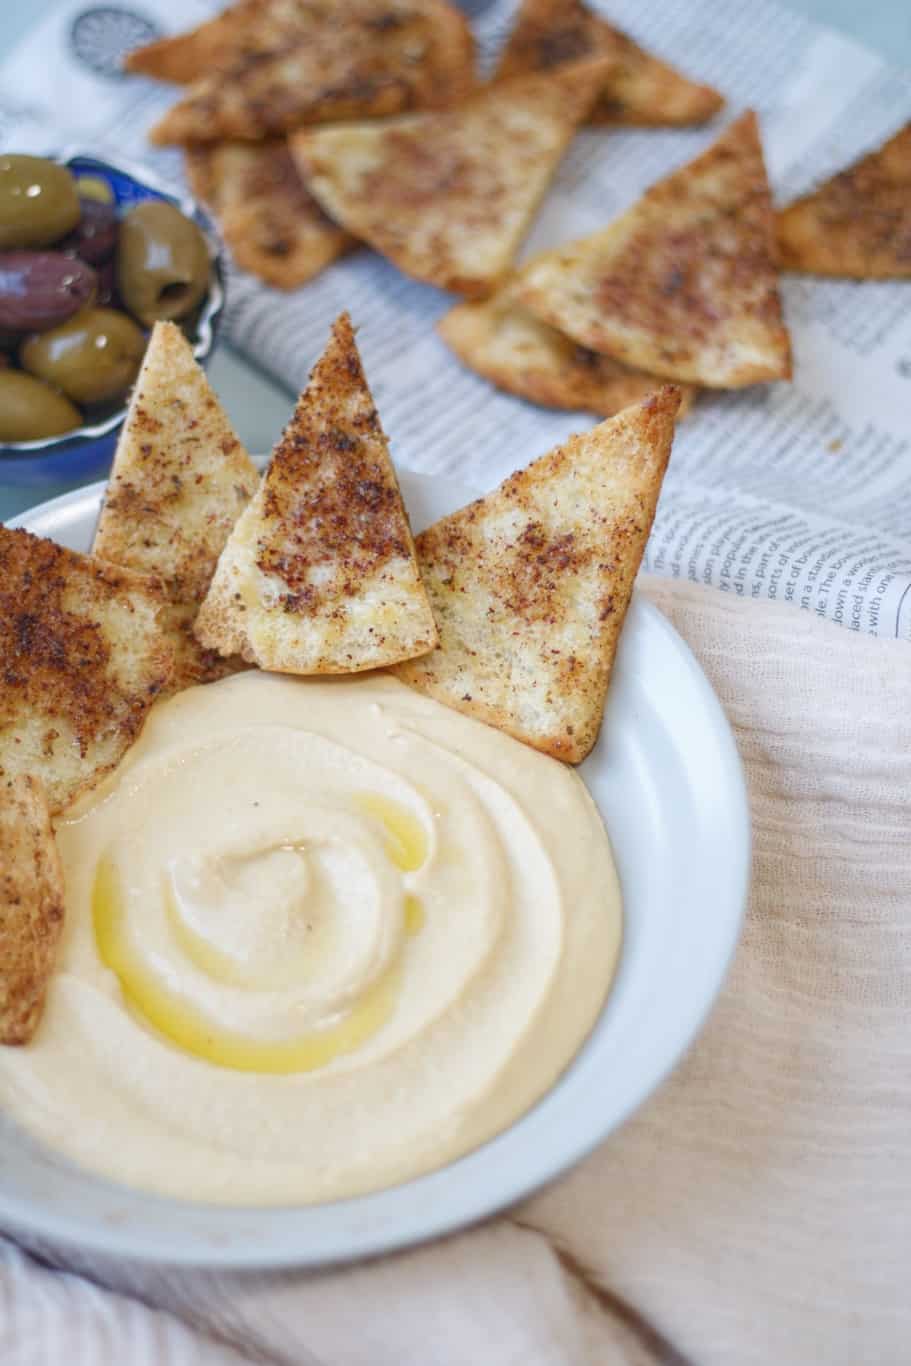 warm homemade triangles of pita bread with creamy lebanese hummus dip